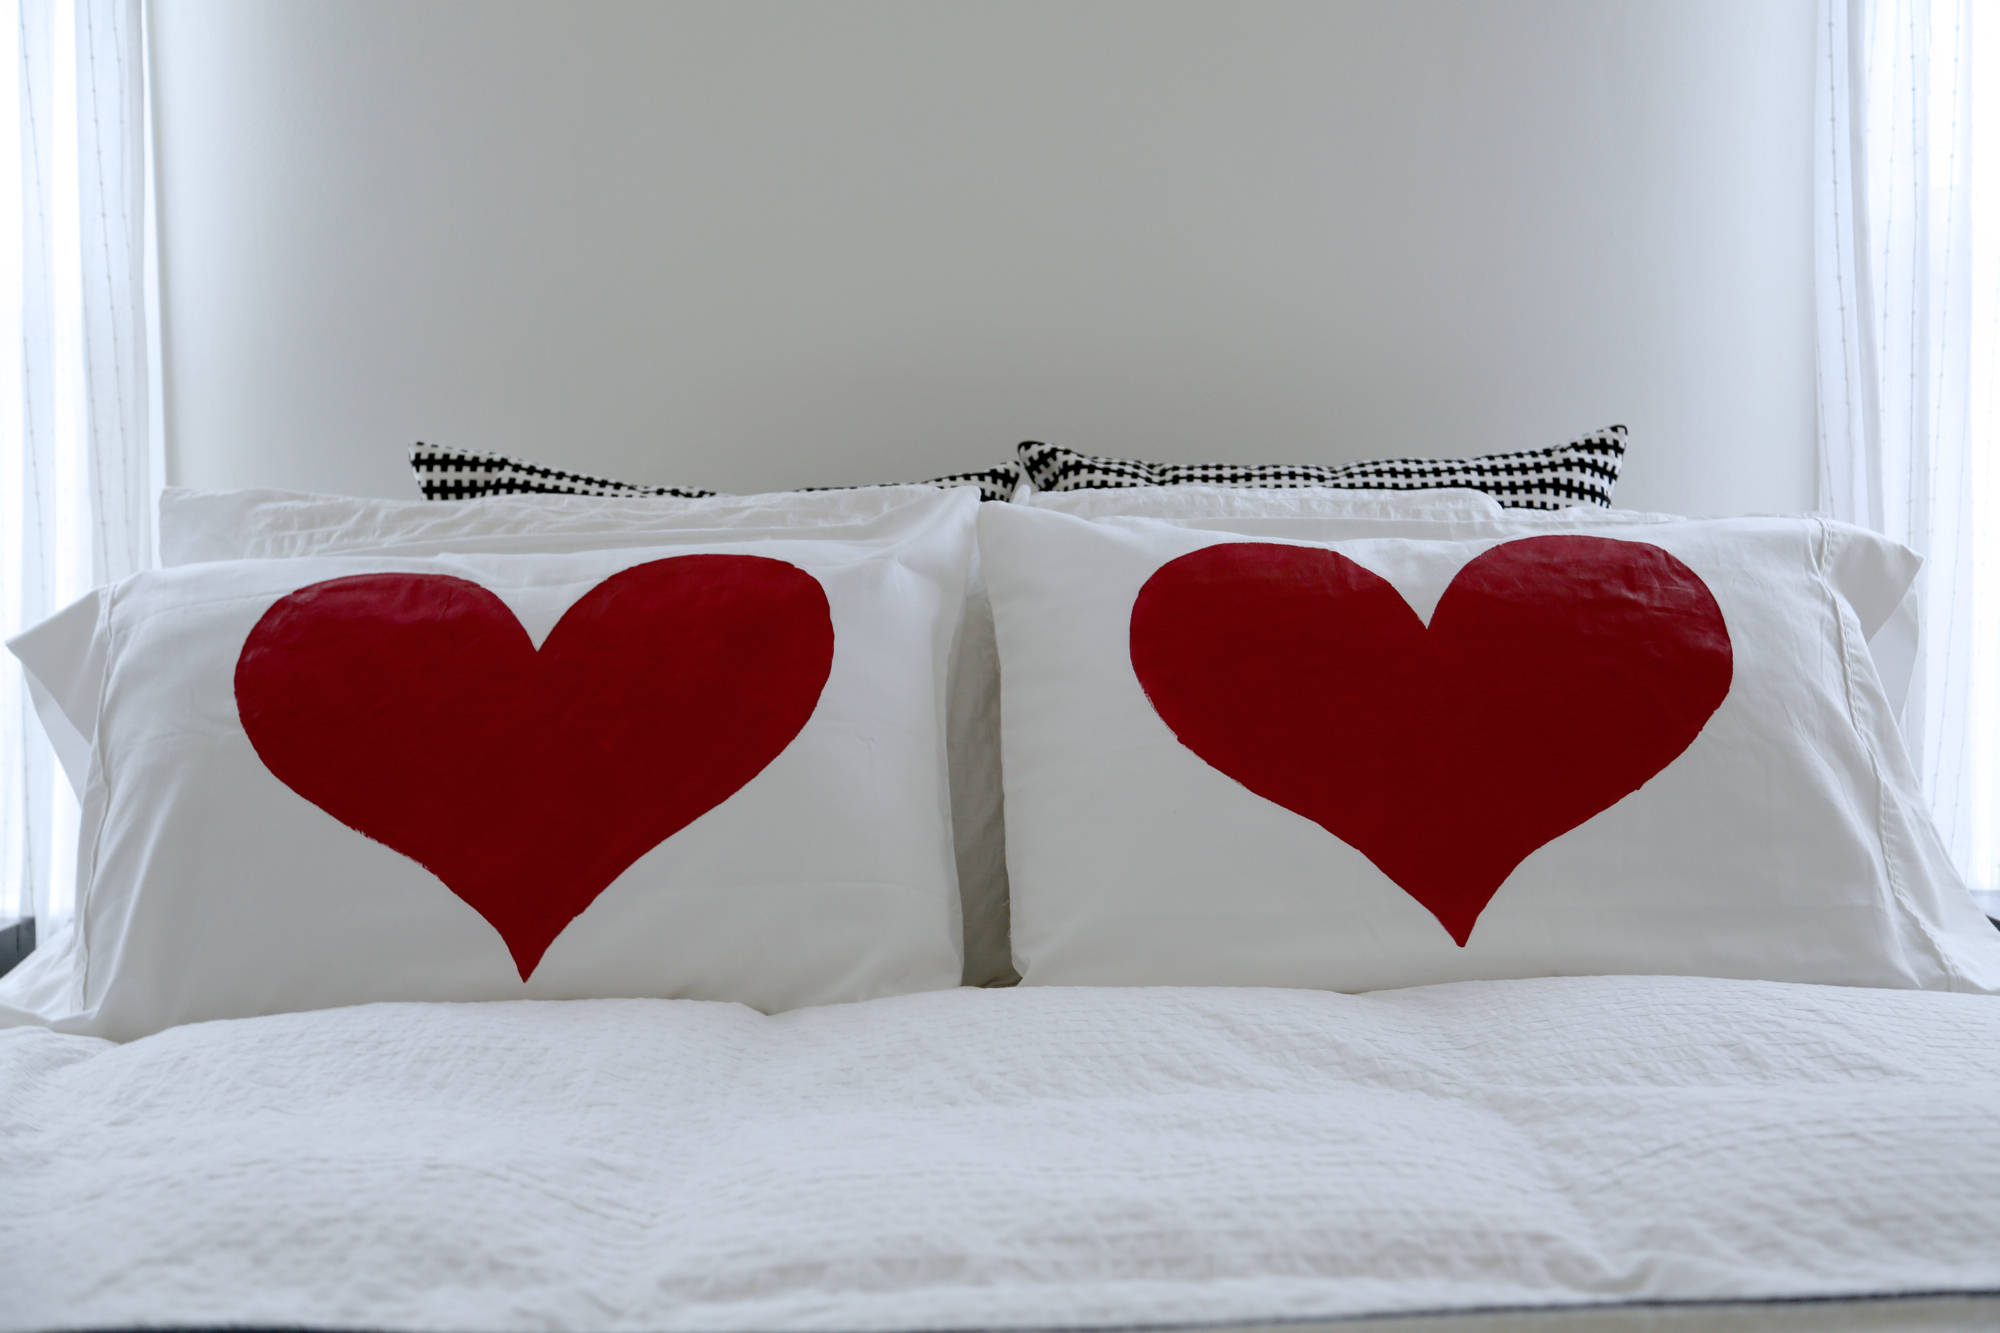 Сердце на подушке песня. Подушки сердечки на кровати. Спальня подушки сердечки. Подушка любовь и сердце. Комната с подушками сердечками.